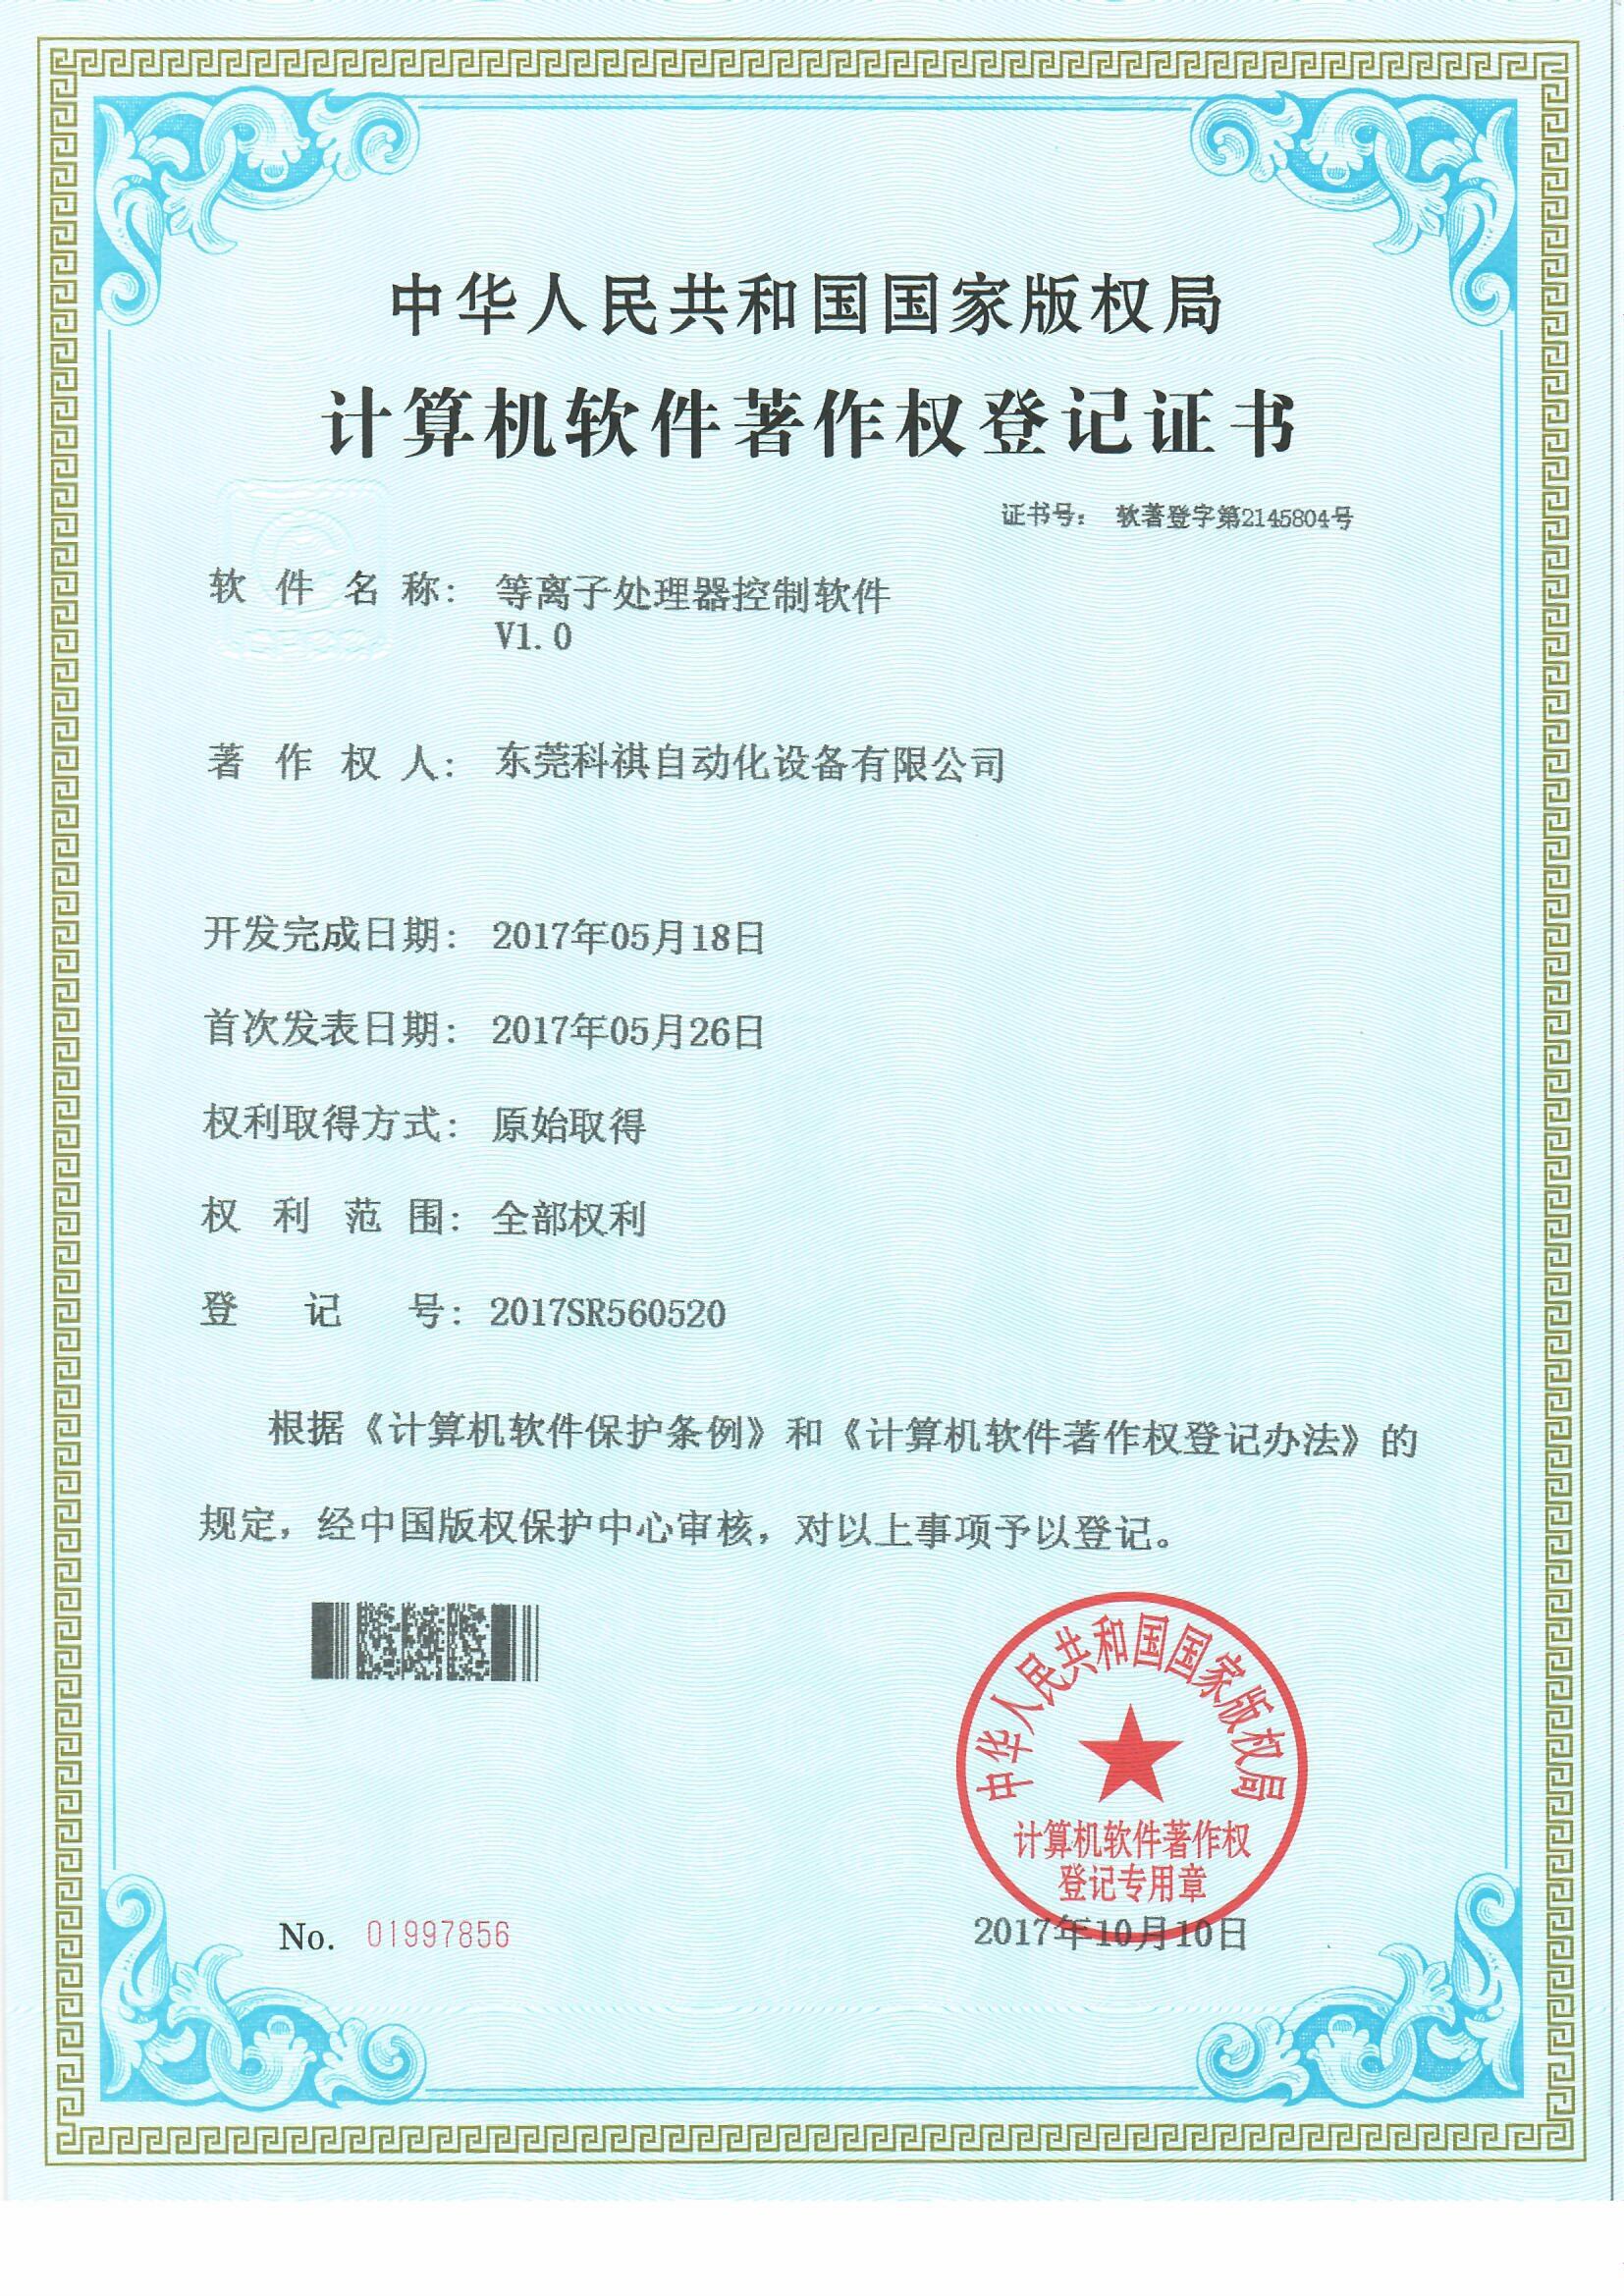 Plasma Copyright Certificate